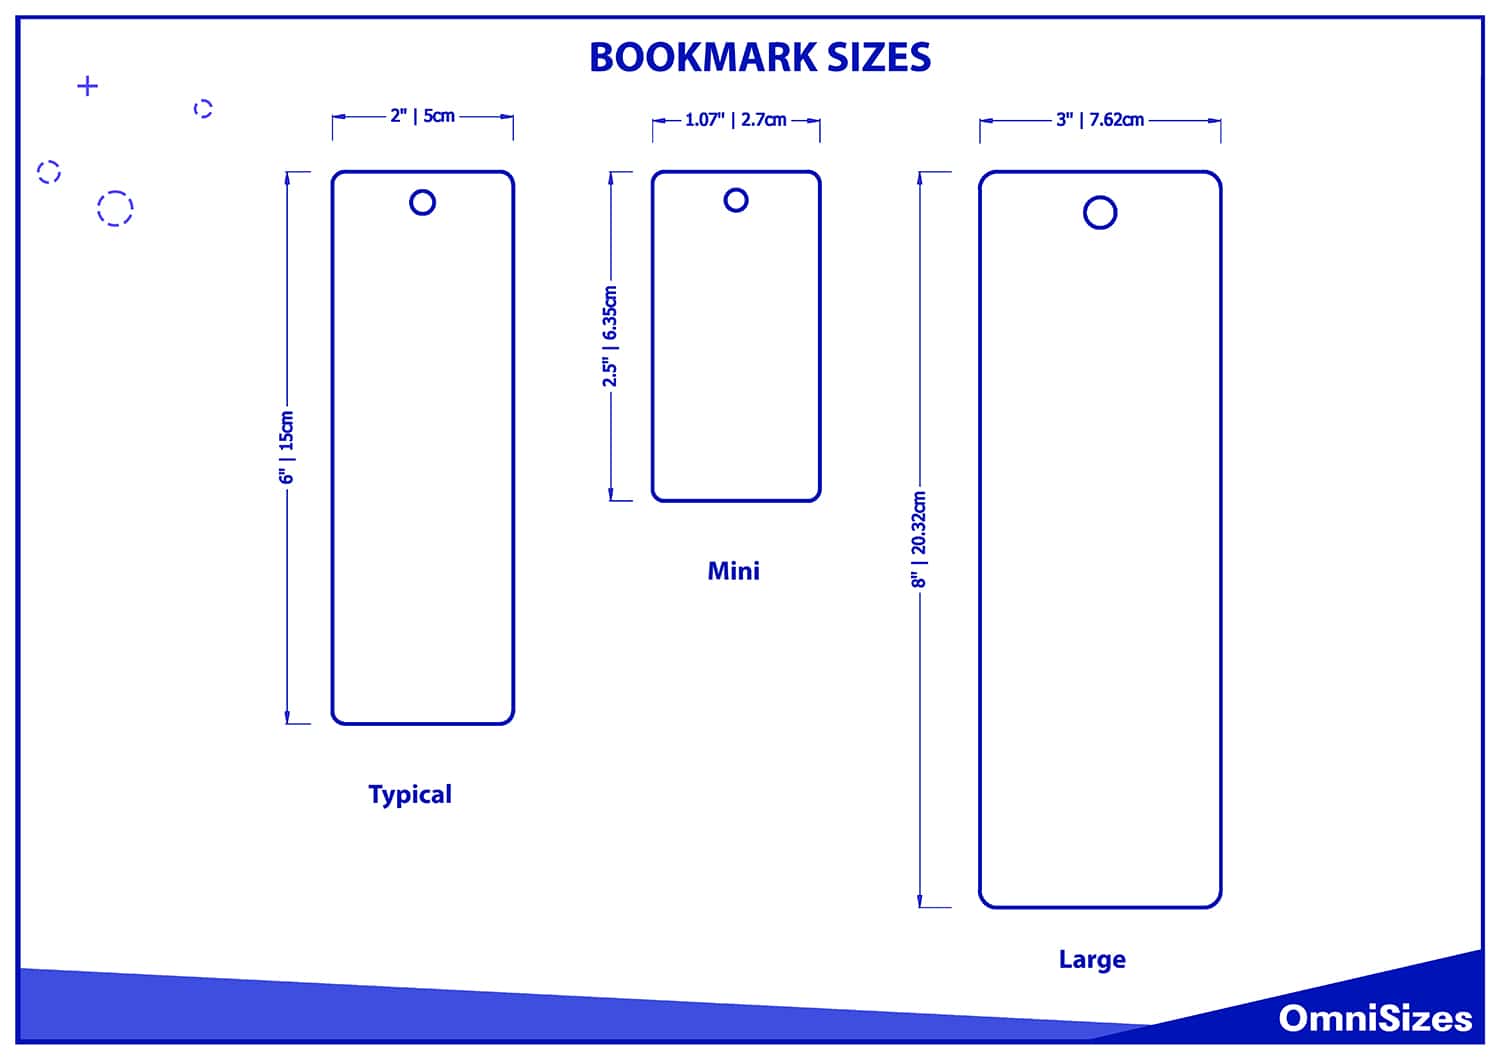 Bookmark sizes